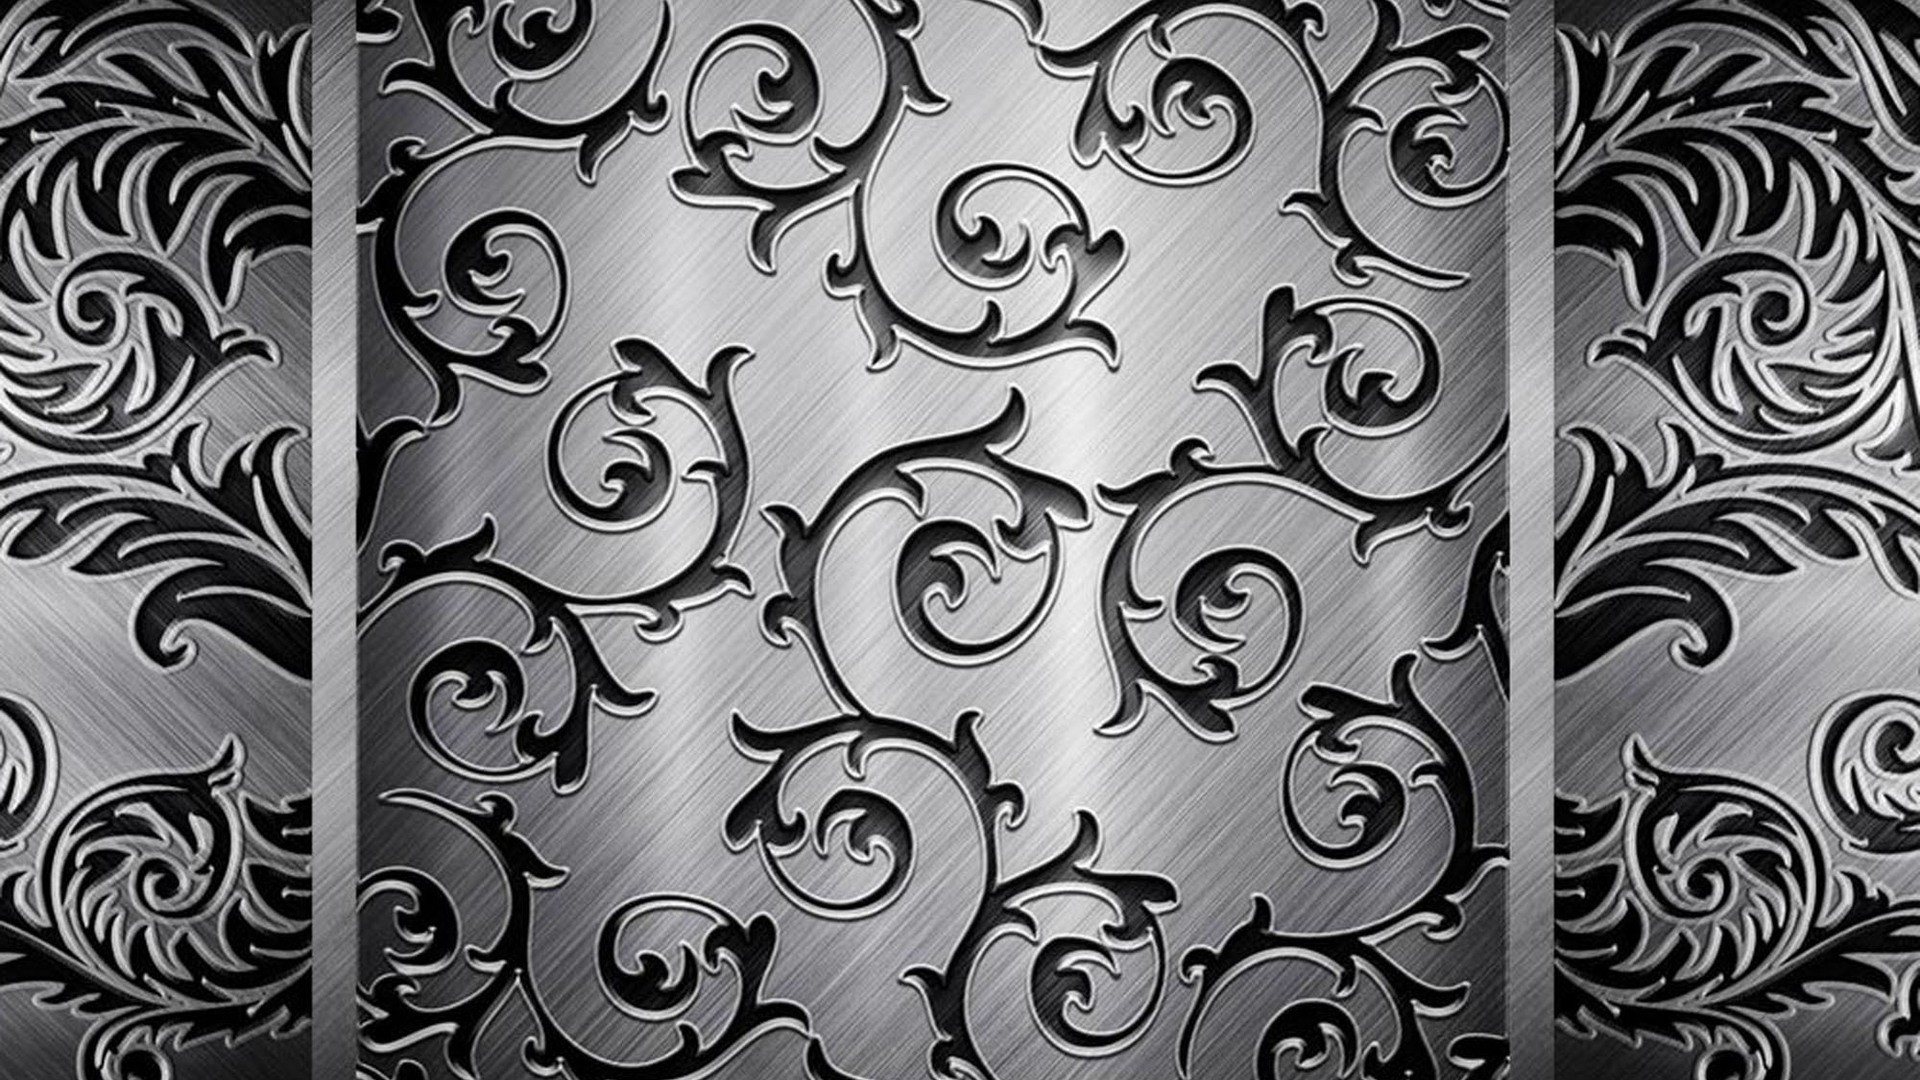 Design Patterns Wallpaper Black And White Crazy Image